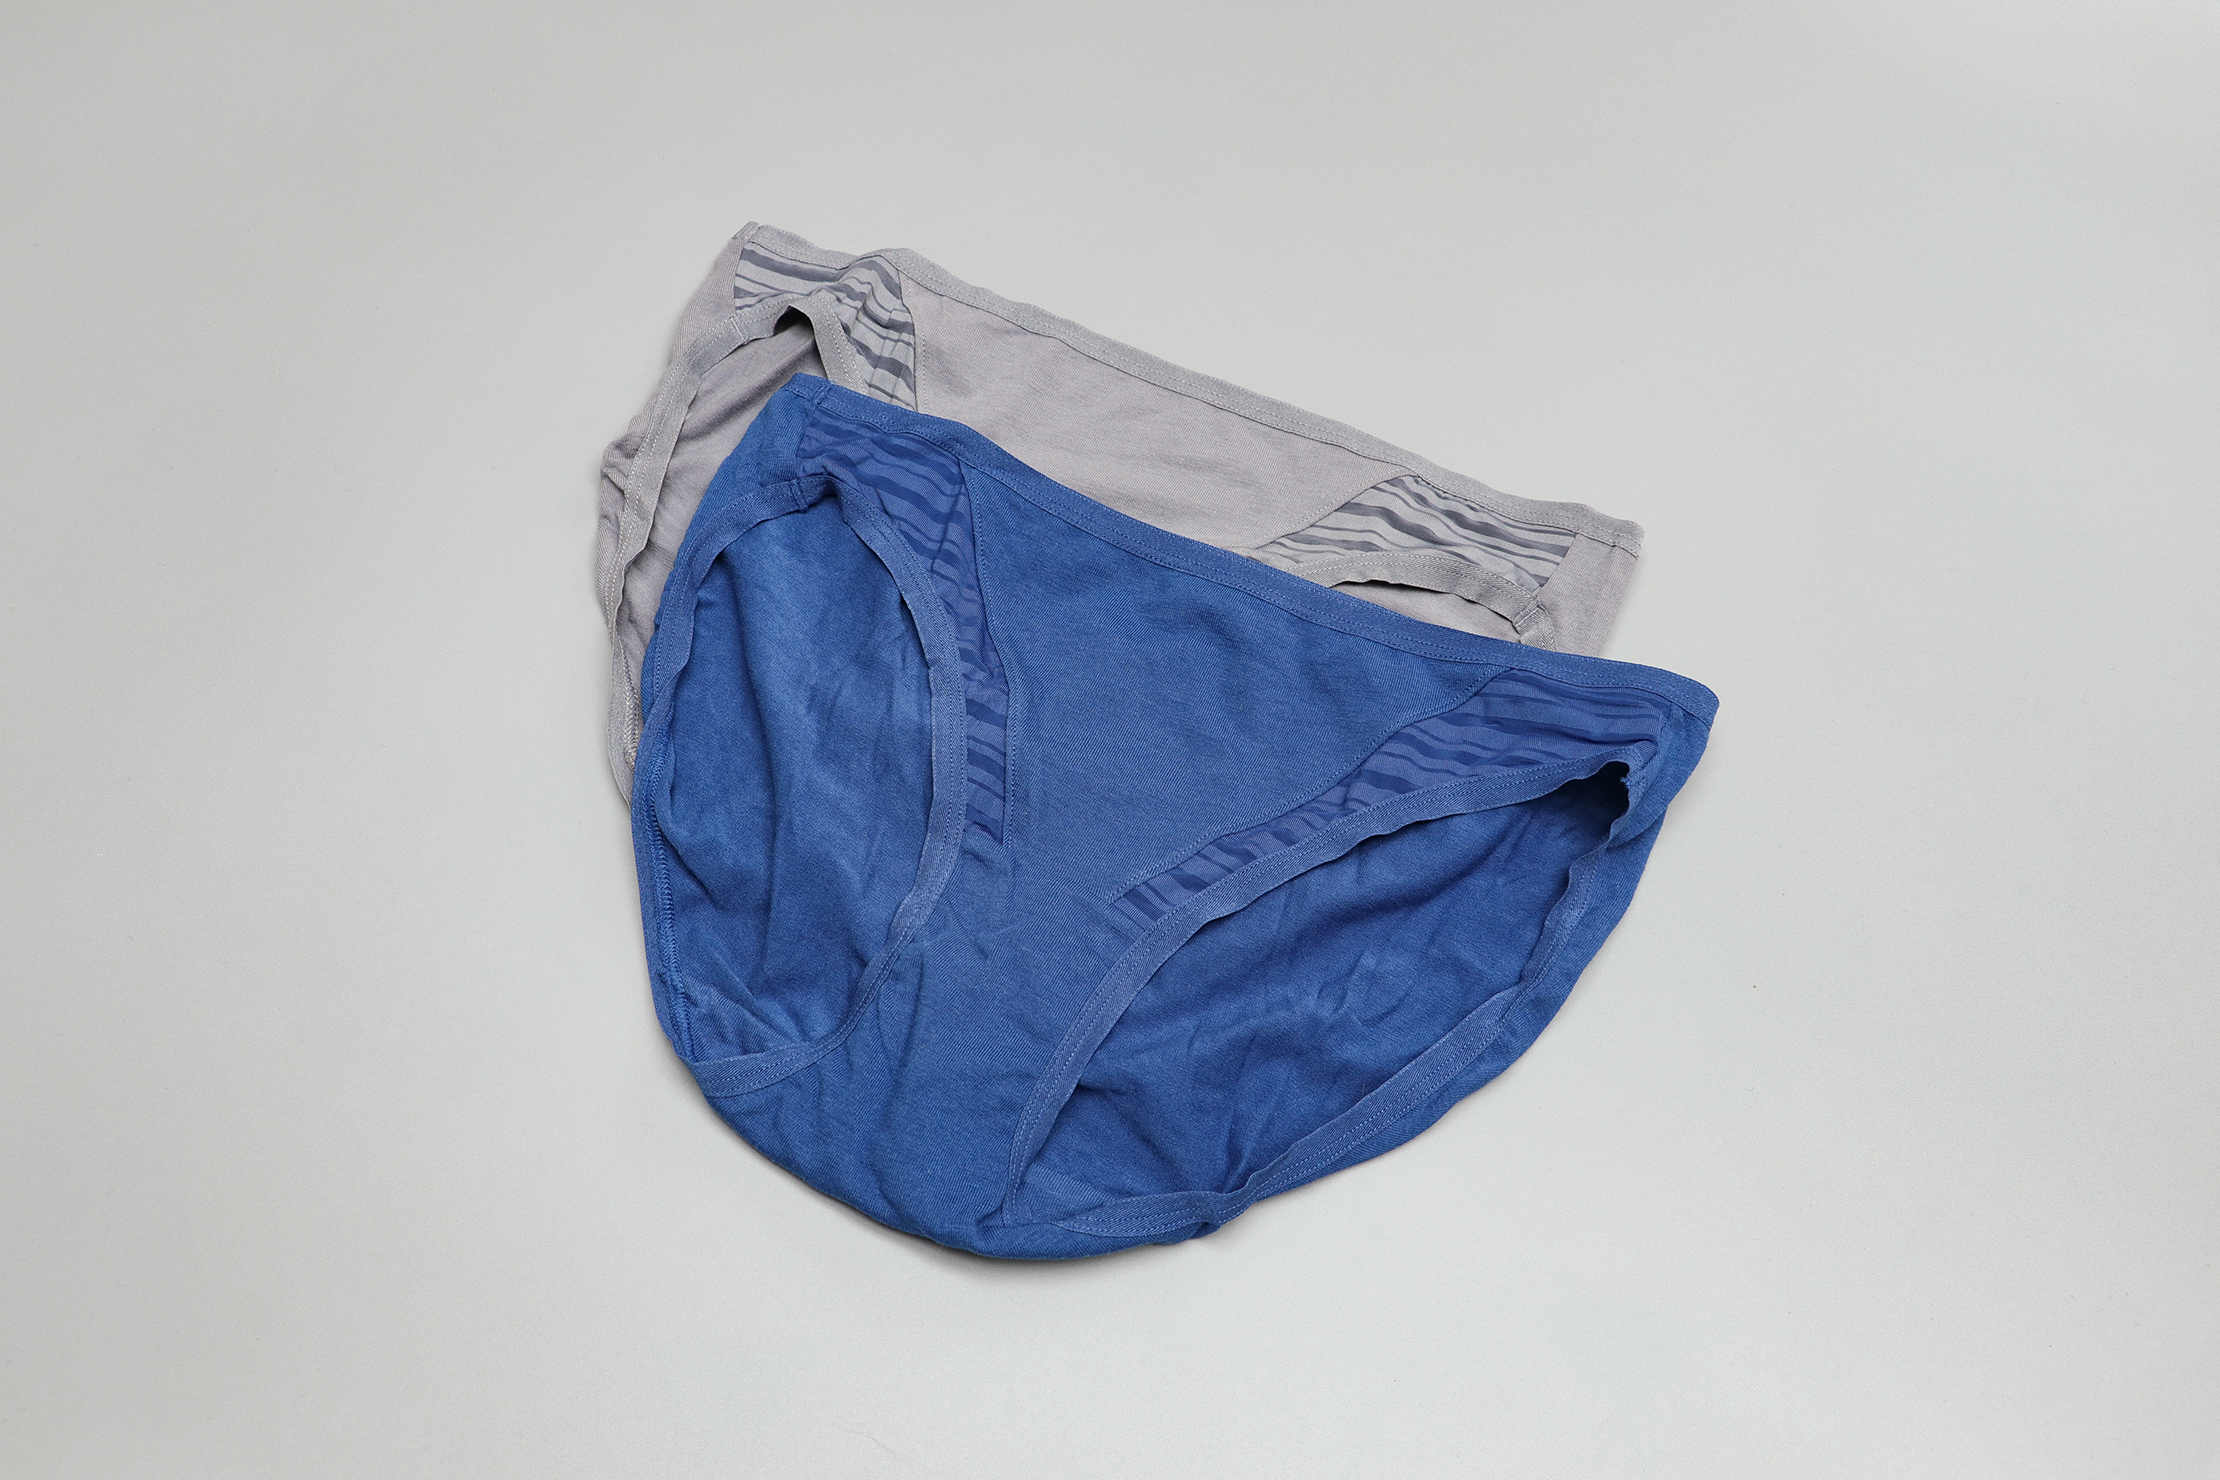 https://cdn.packhacker.com/2019/09/c88e0781-fruit-of-the-loom-underwear.jpg